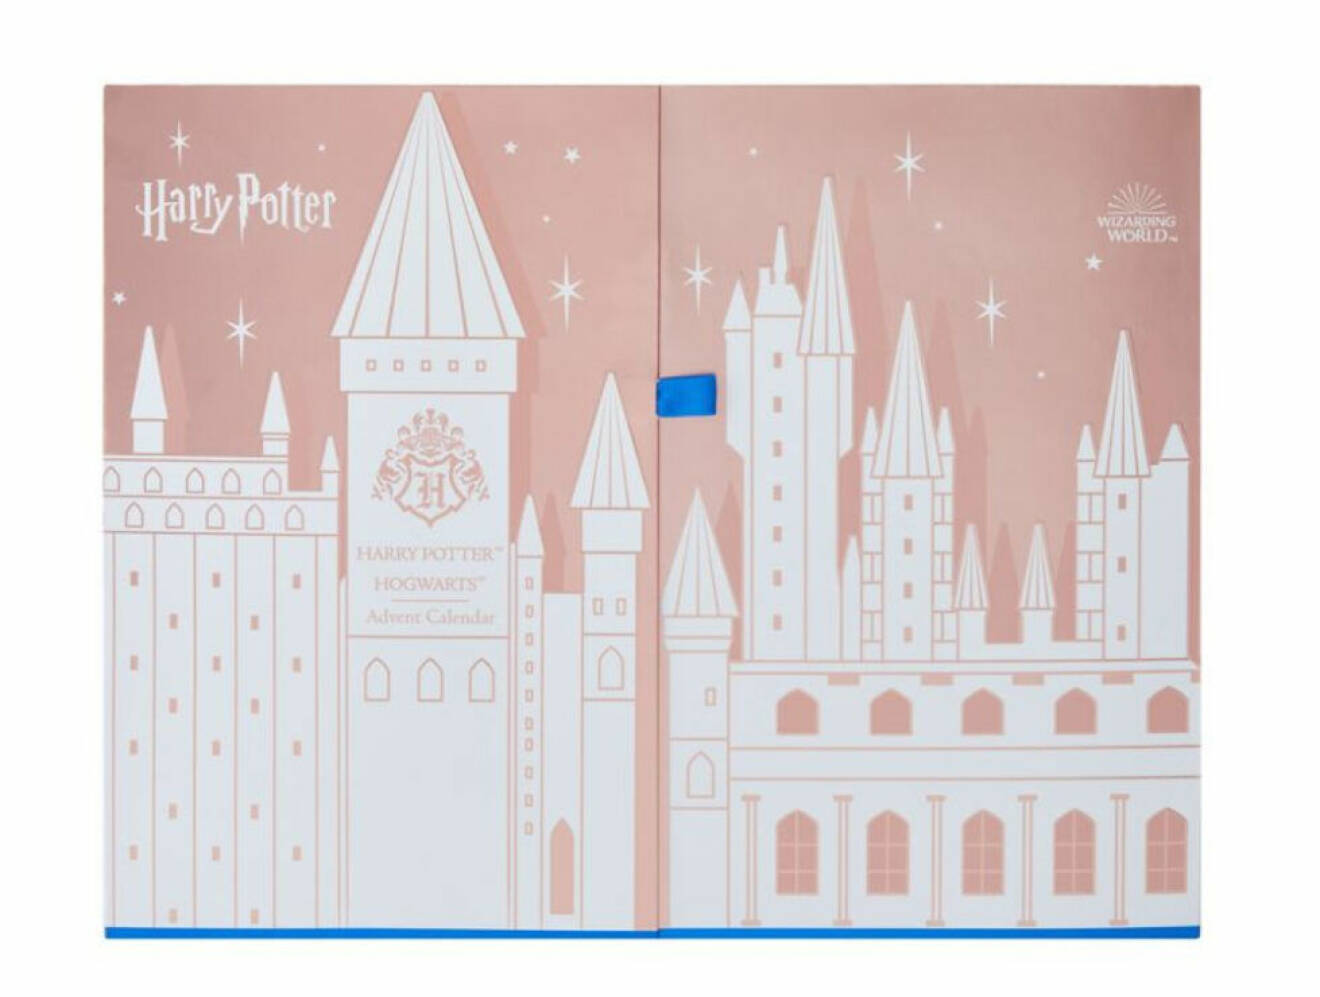 Harry Potter adventskalender med skönhet